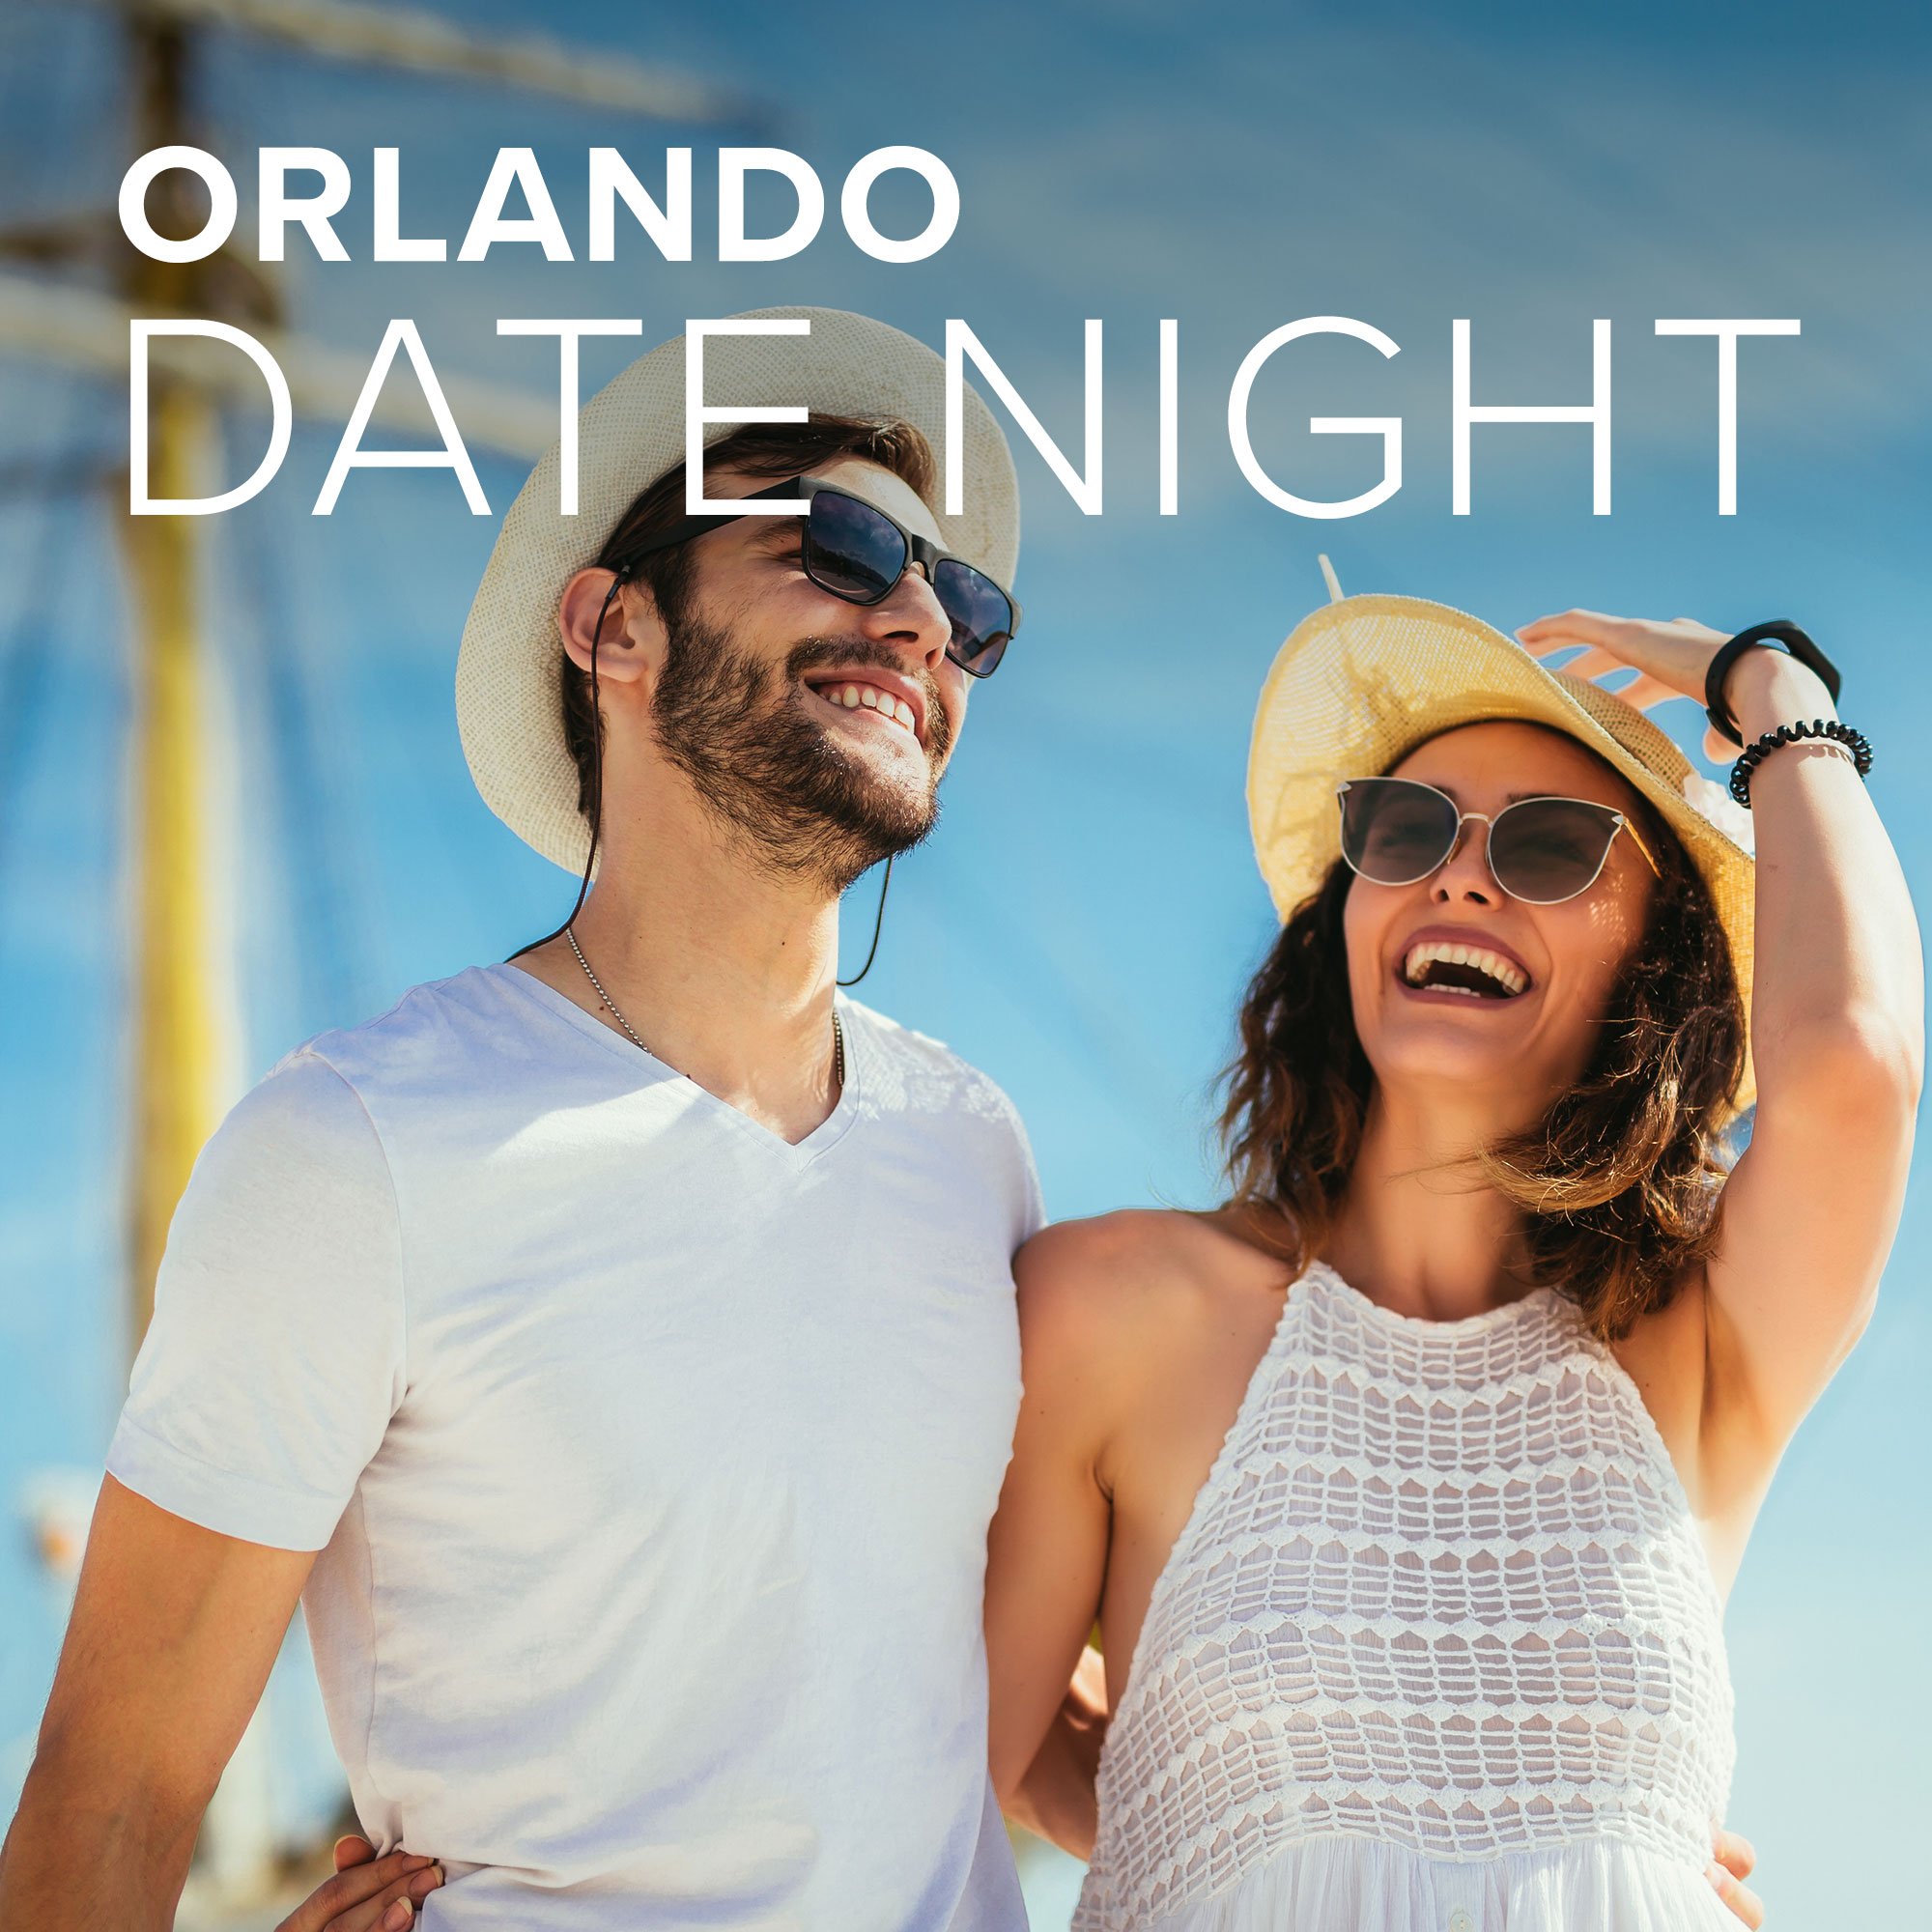 Orlando Date Night Activities & Date Night Experience Gifts